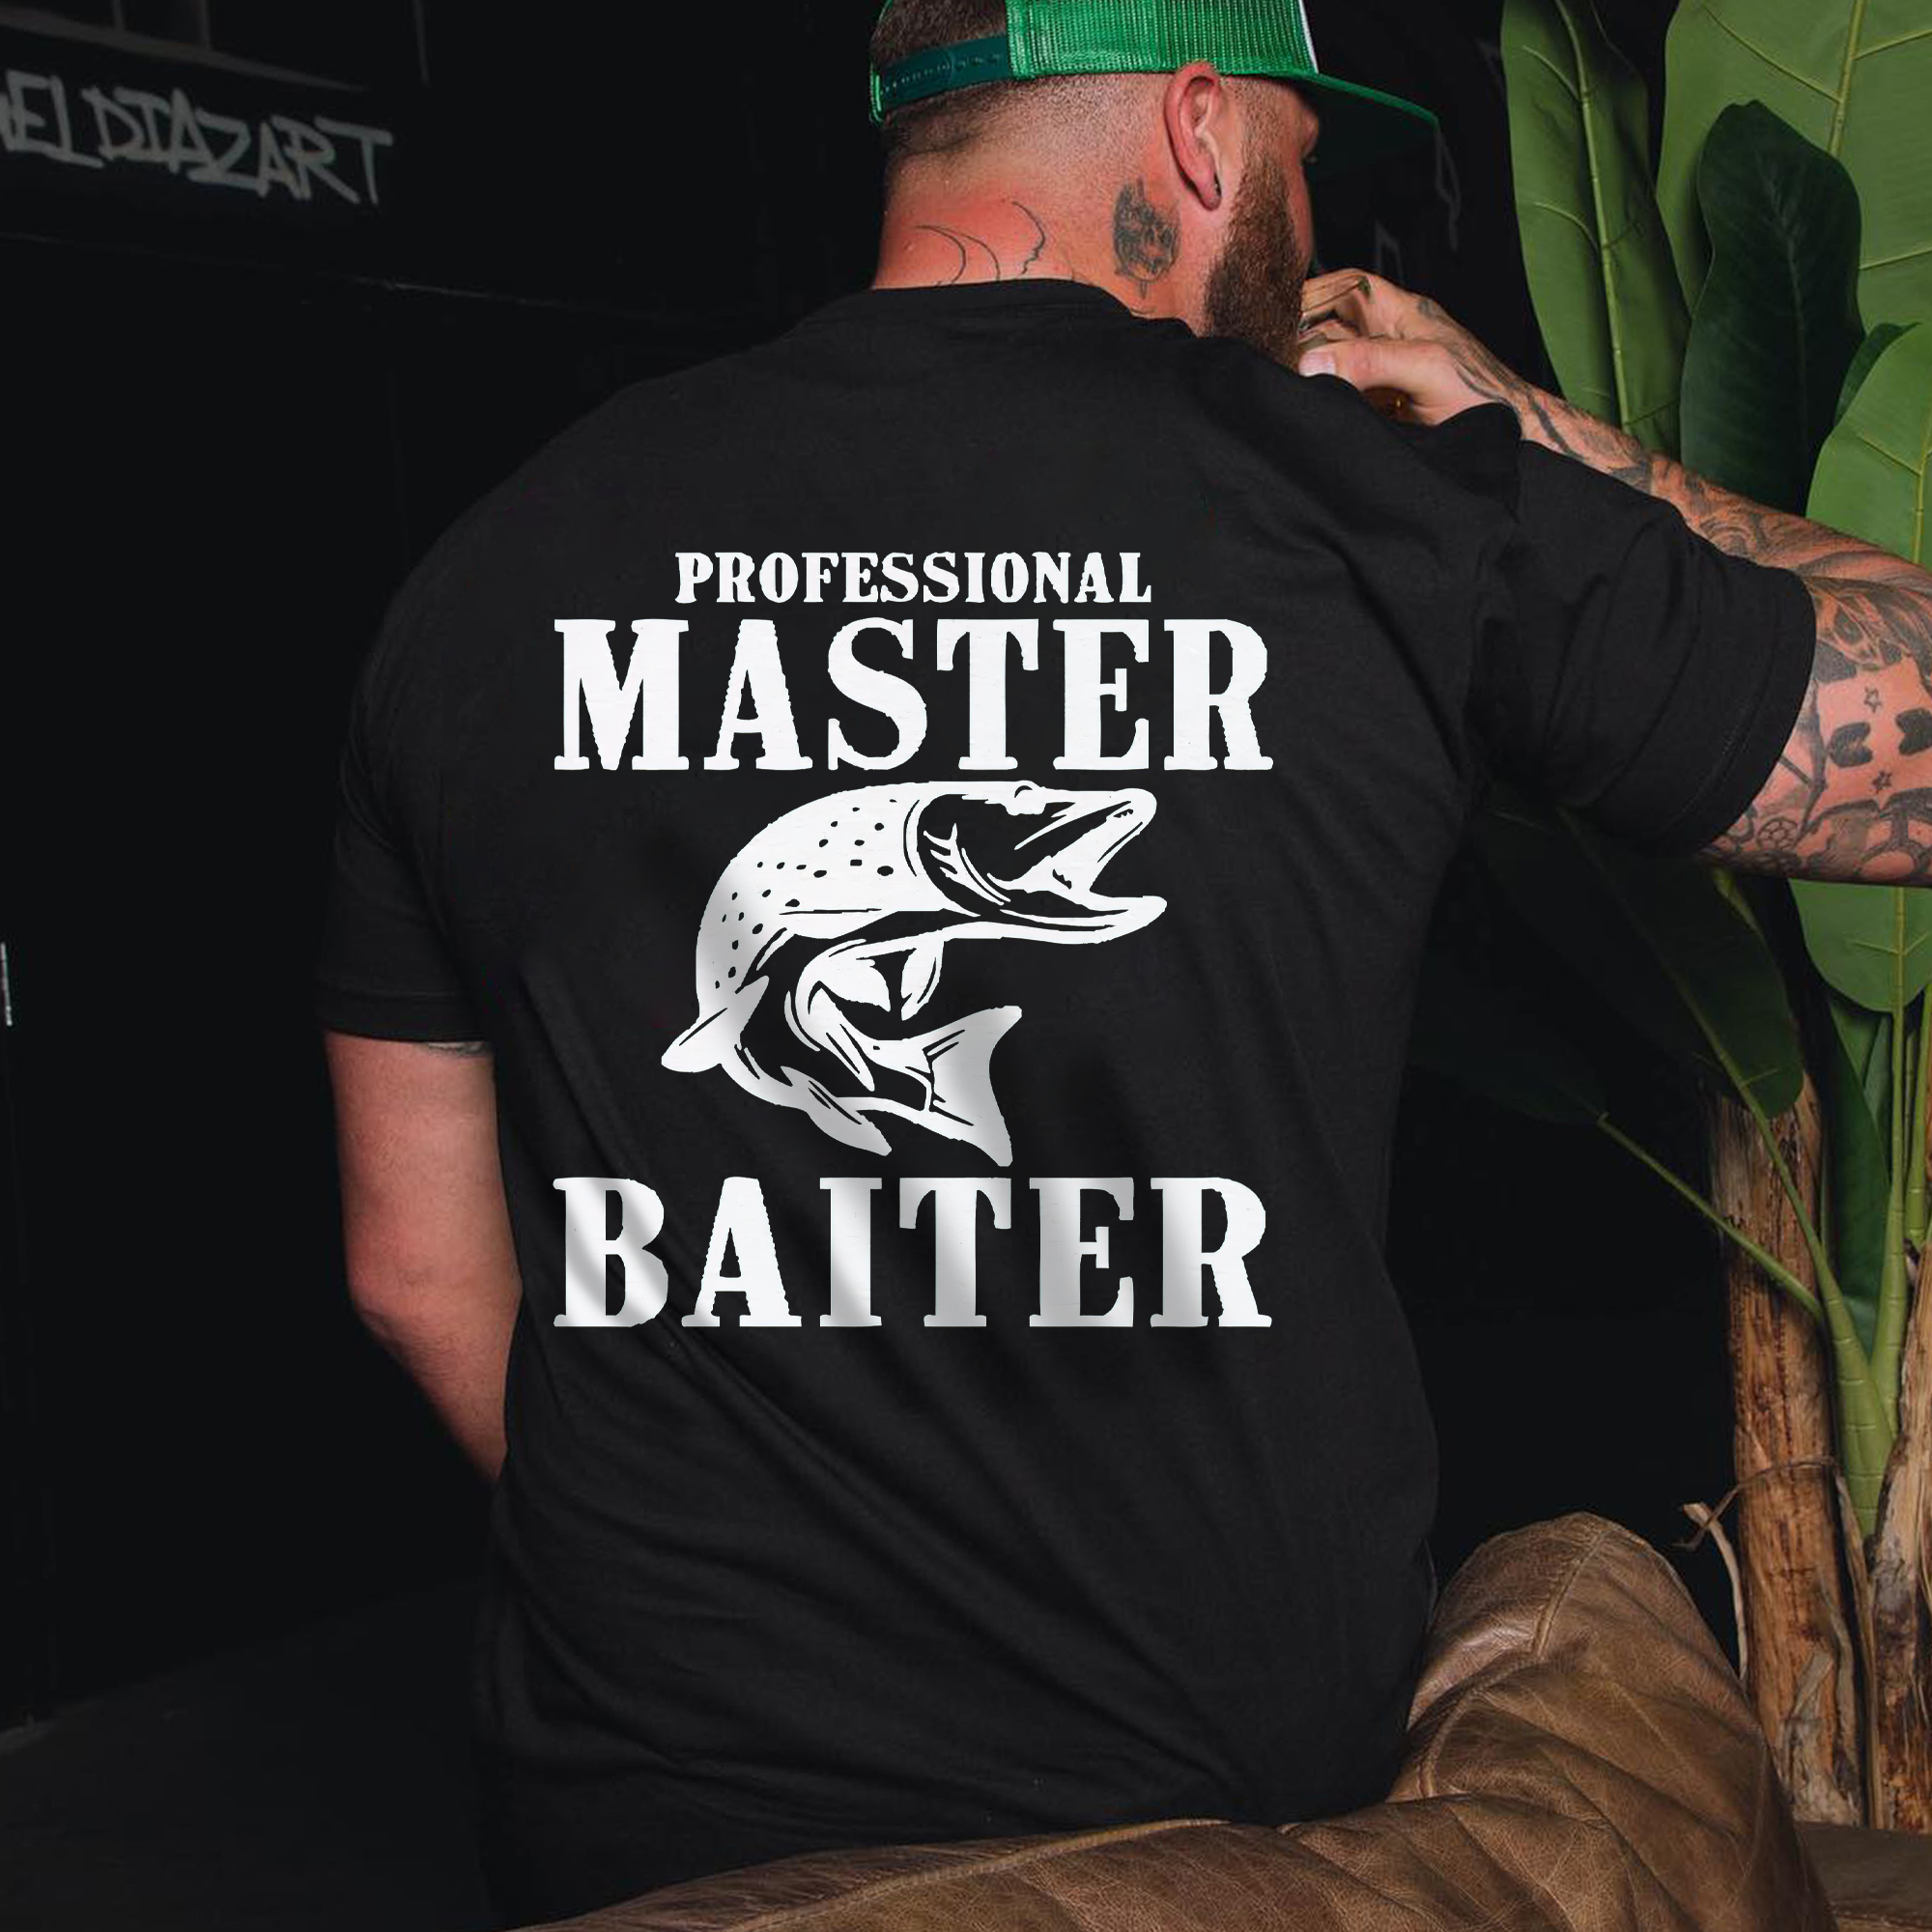 Professional Master Baiter Printed Men's T-shirt